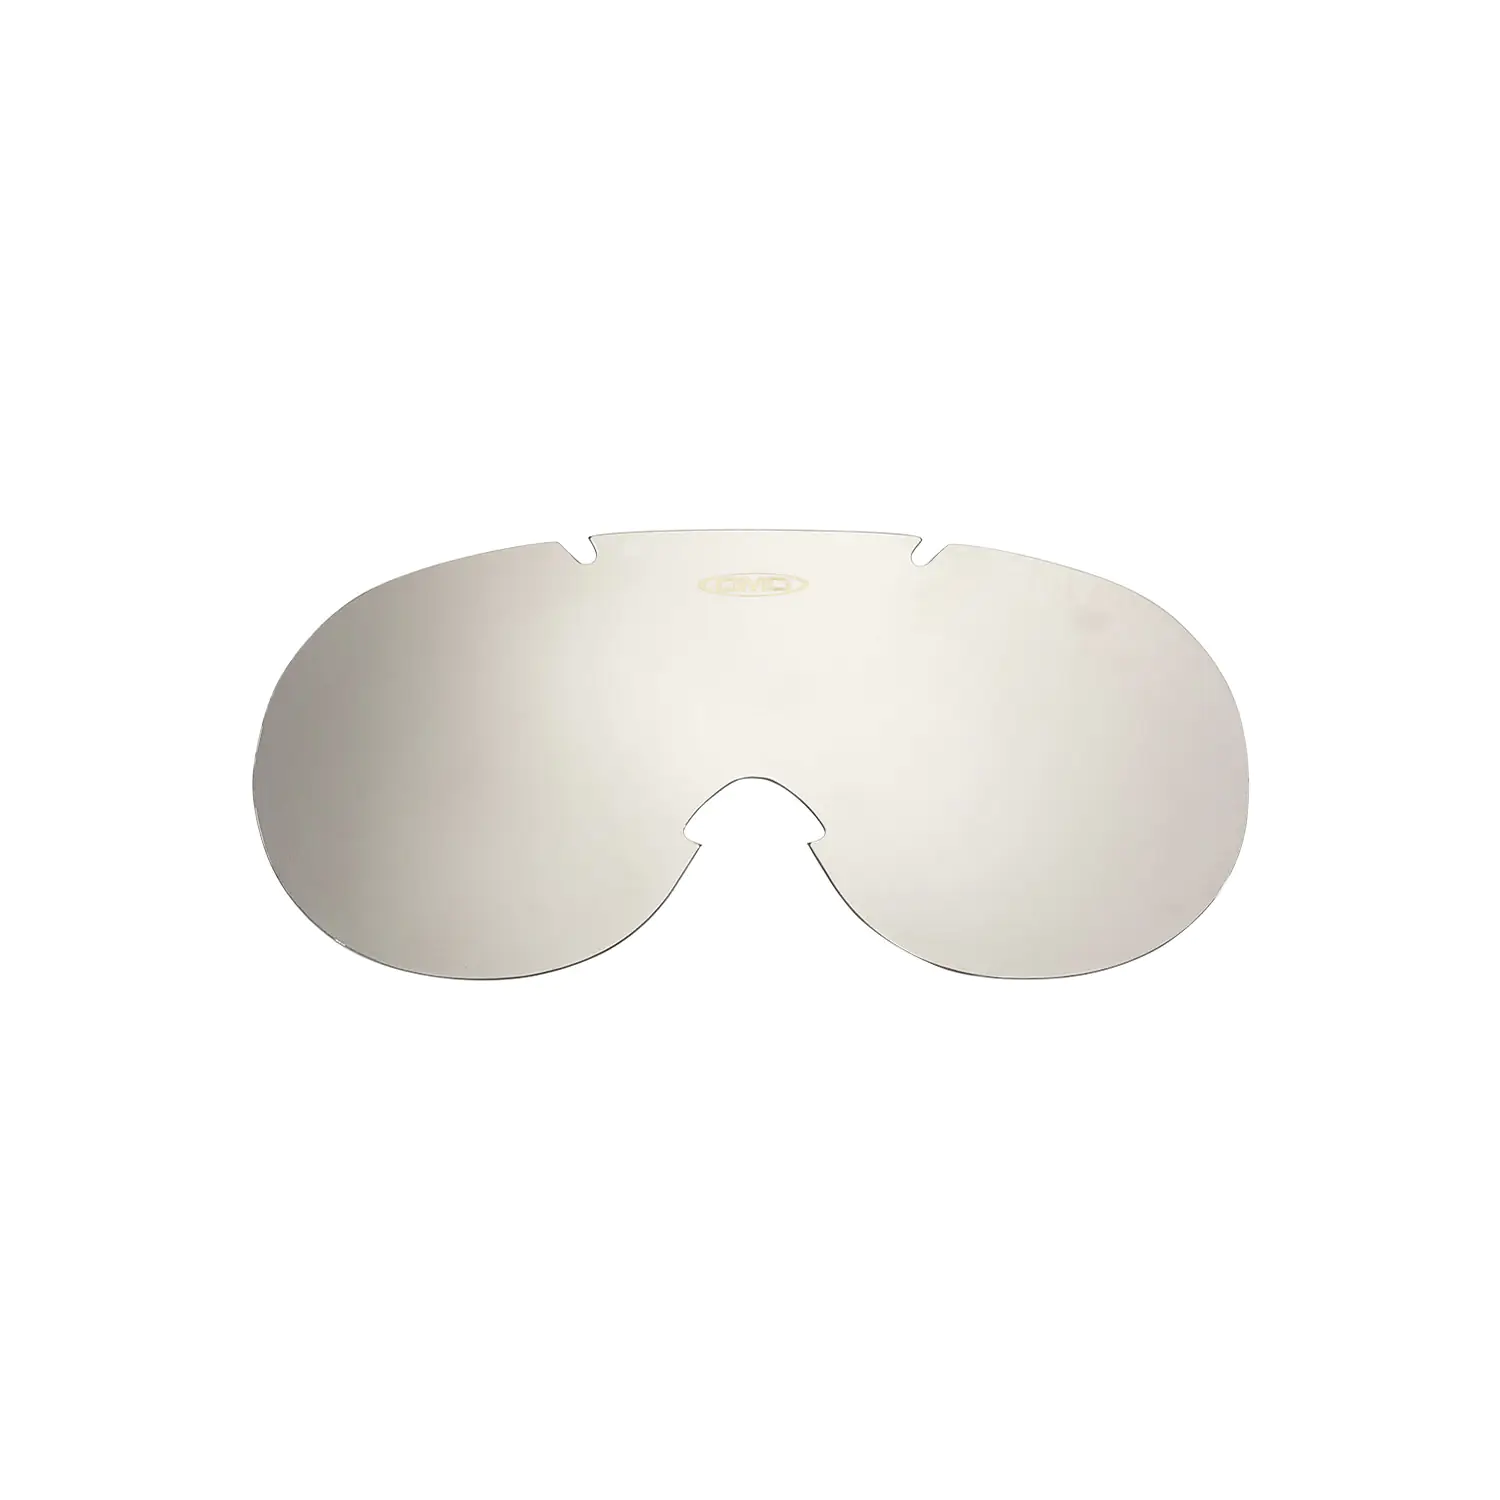 dmd.eu - LENTE RICAMBIO GHOST DMD – accessory ghost mirror lens